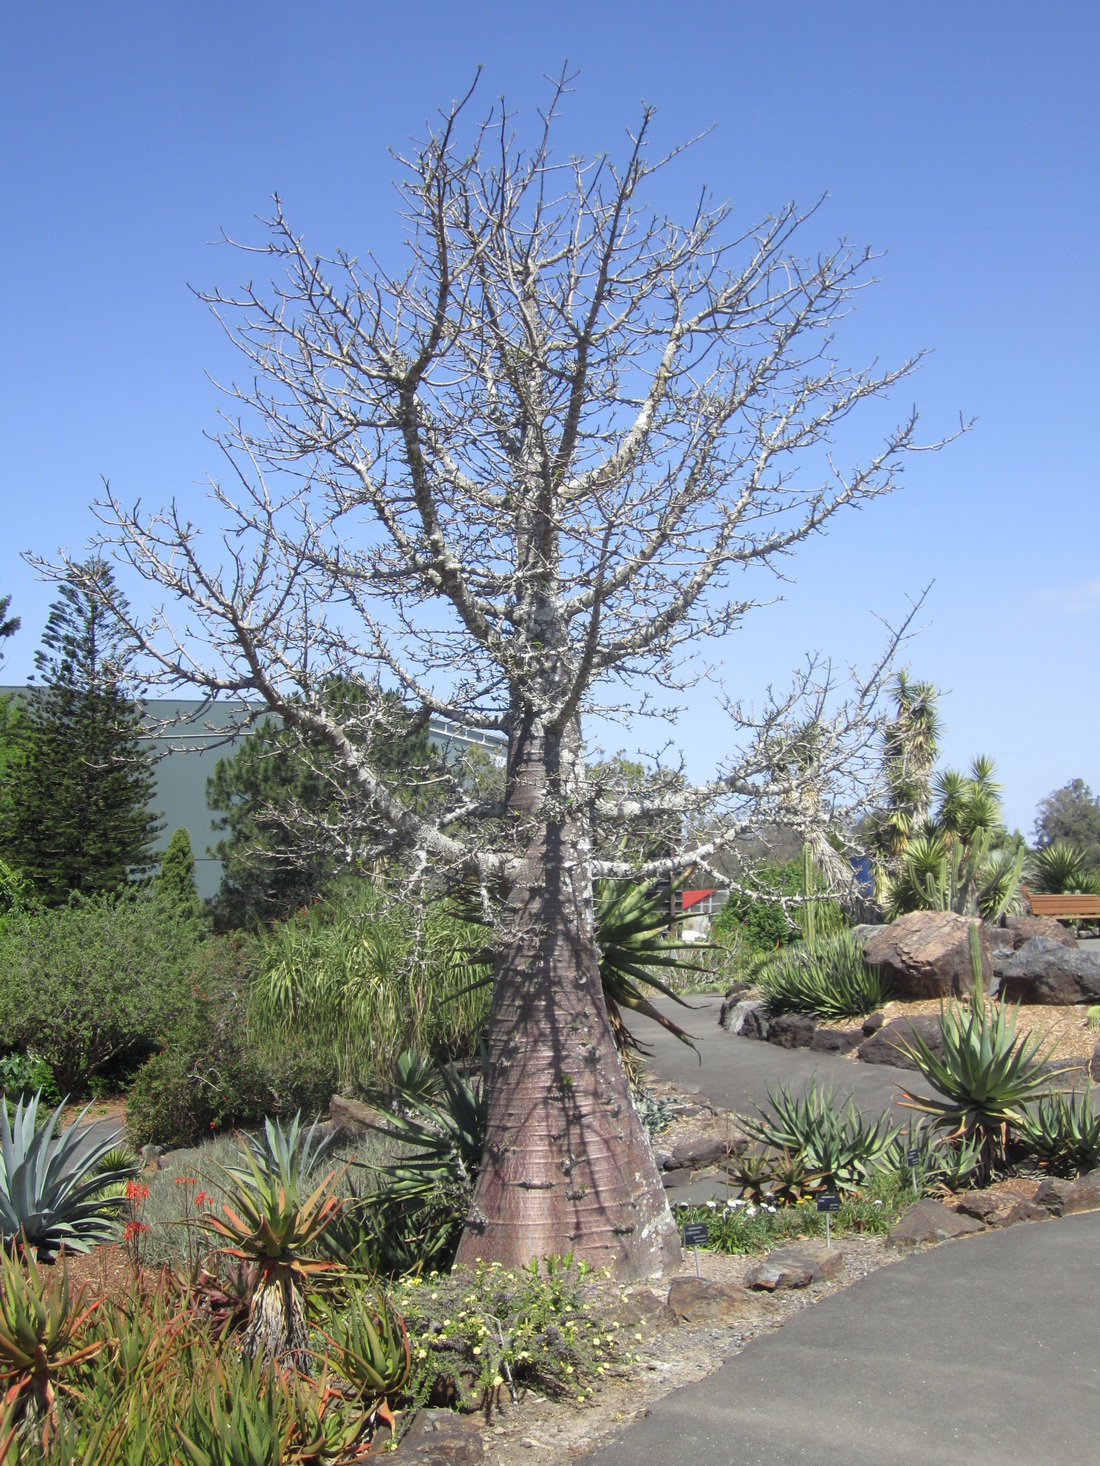 Adansonia grandidieri tree in the arid plants section of the Mount Coot-tha Botanical Gardens